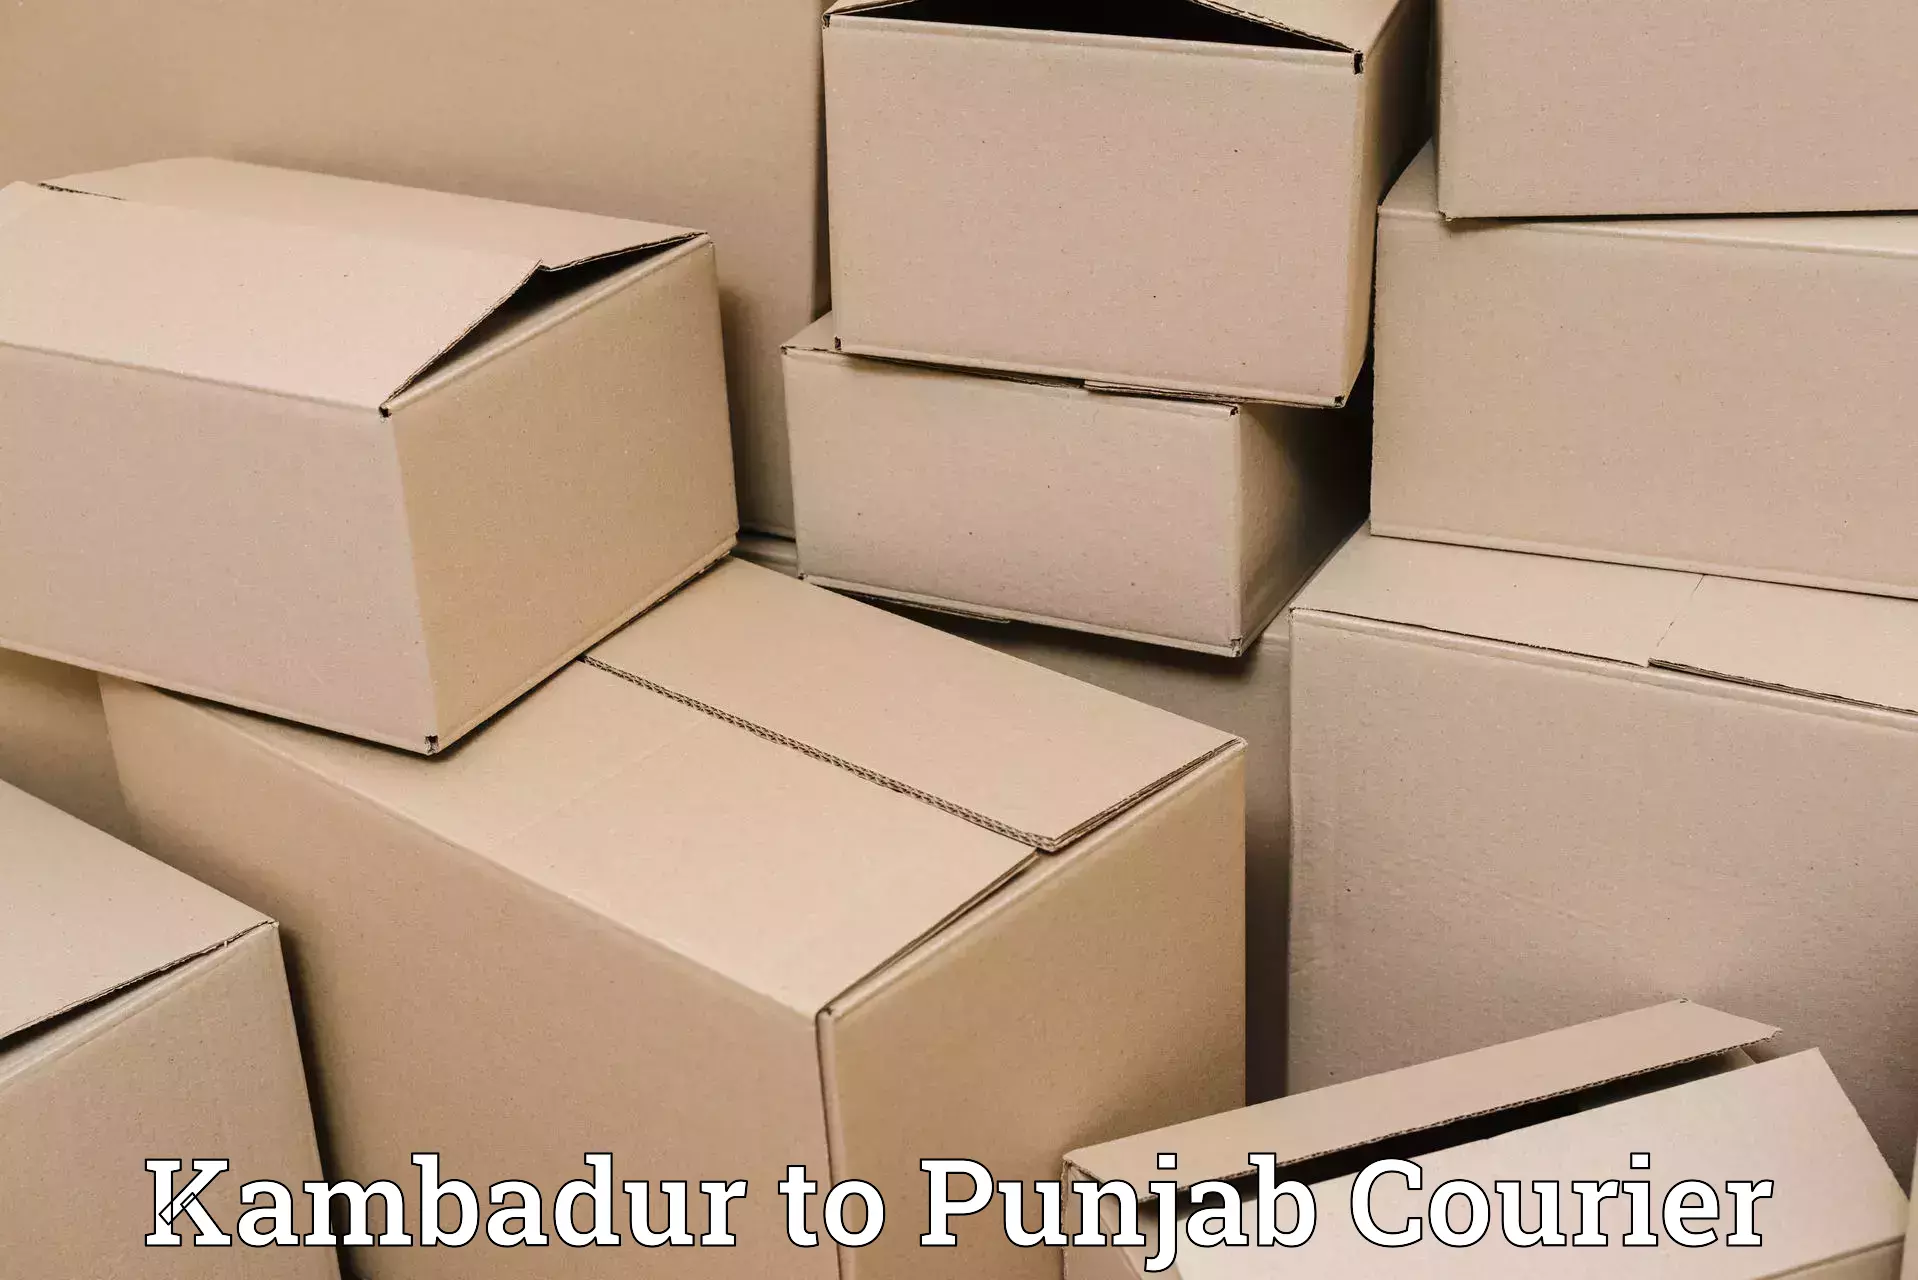 Courier service innovation Kambadur to Raikot